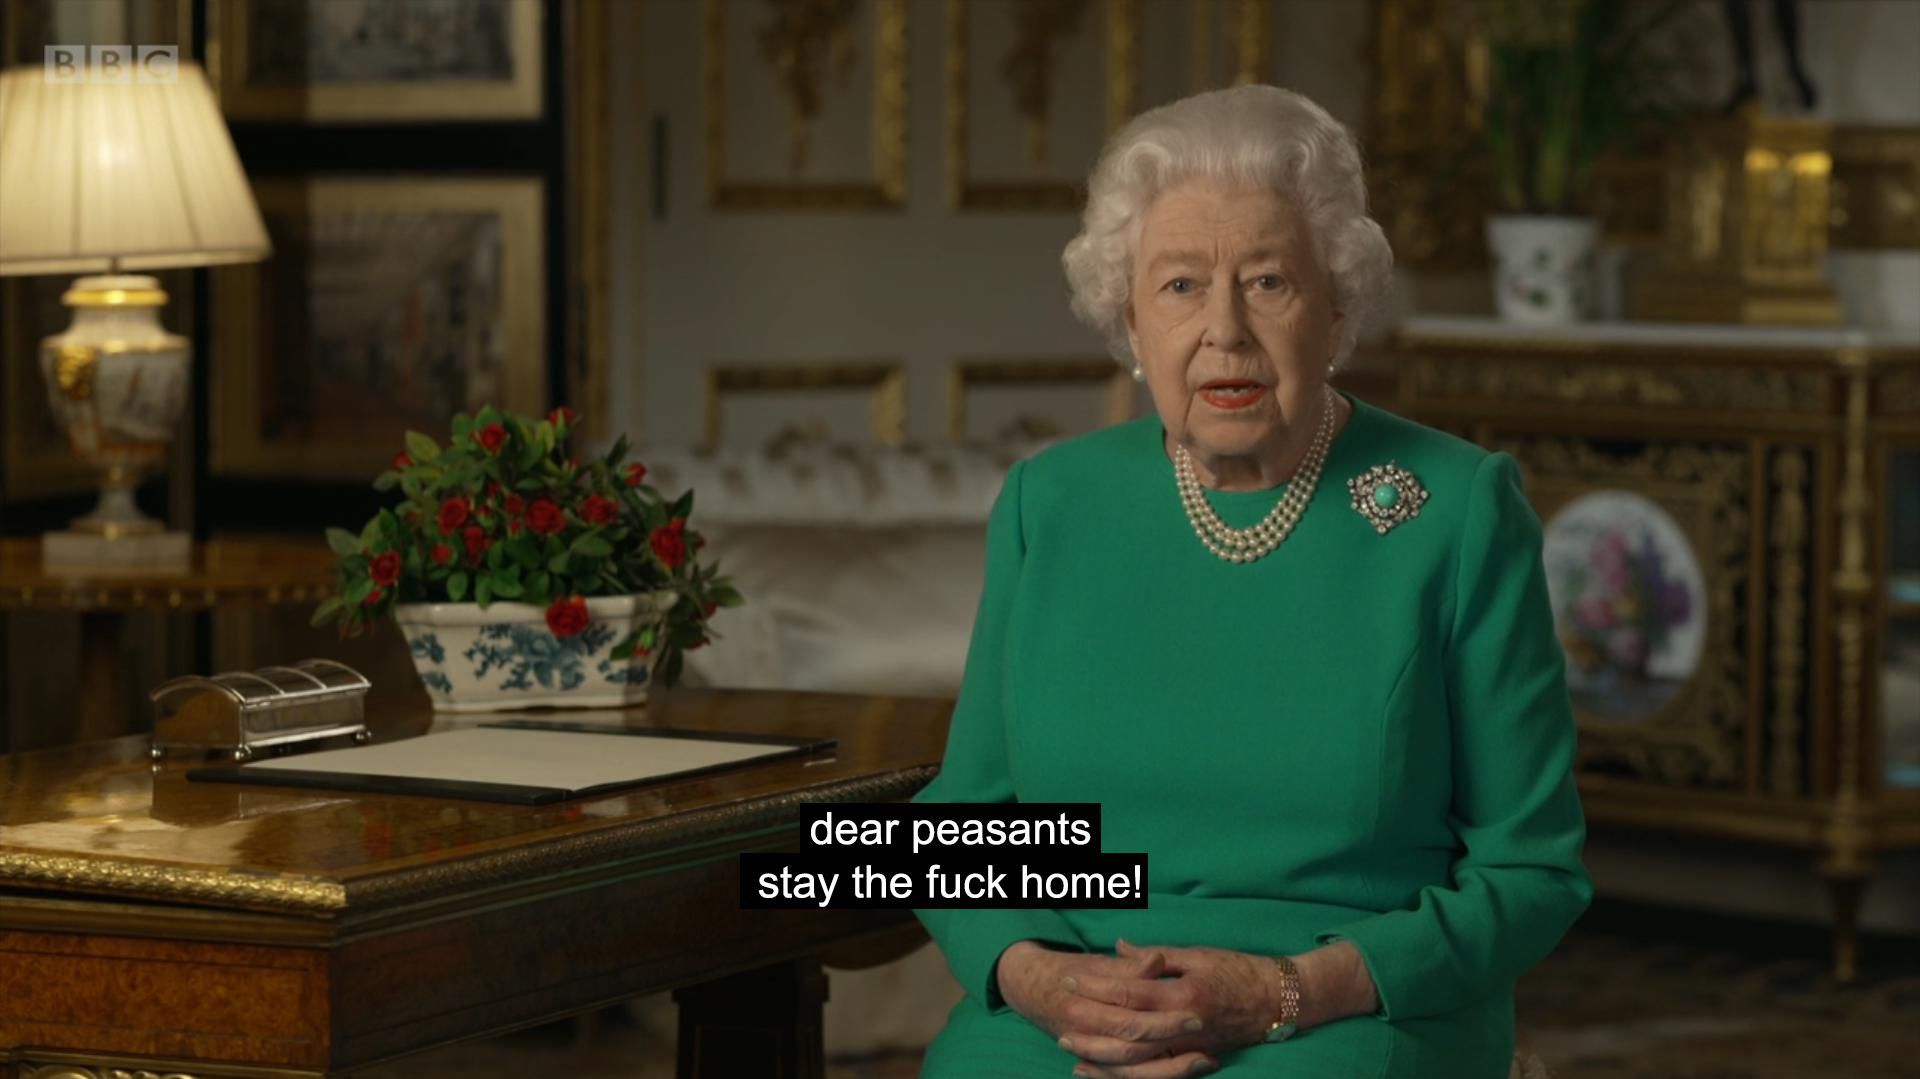 The Queen's Address